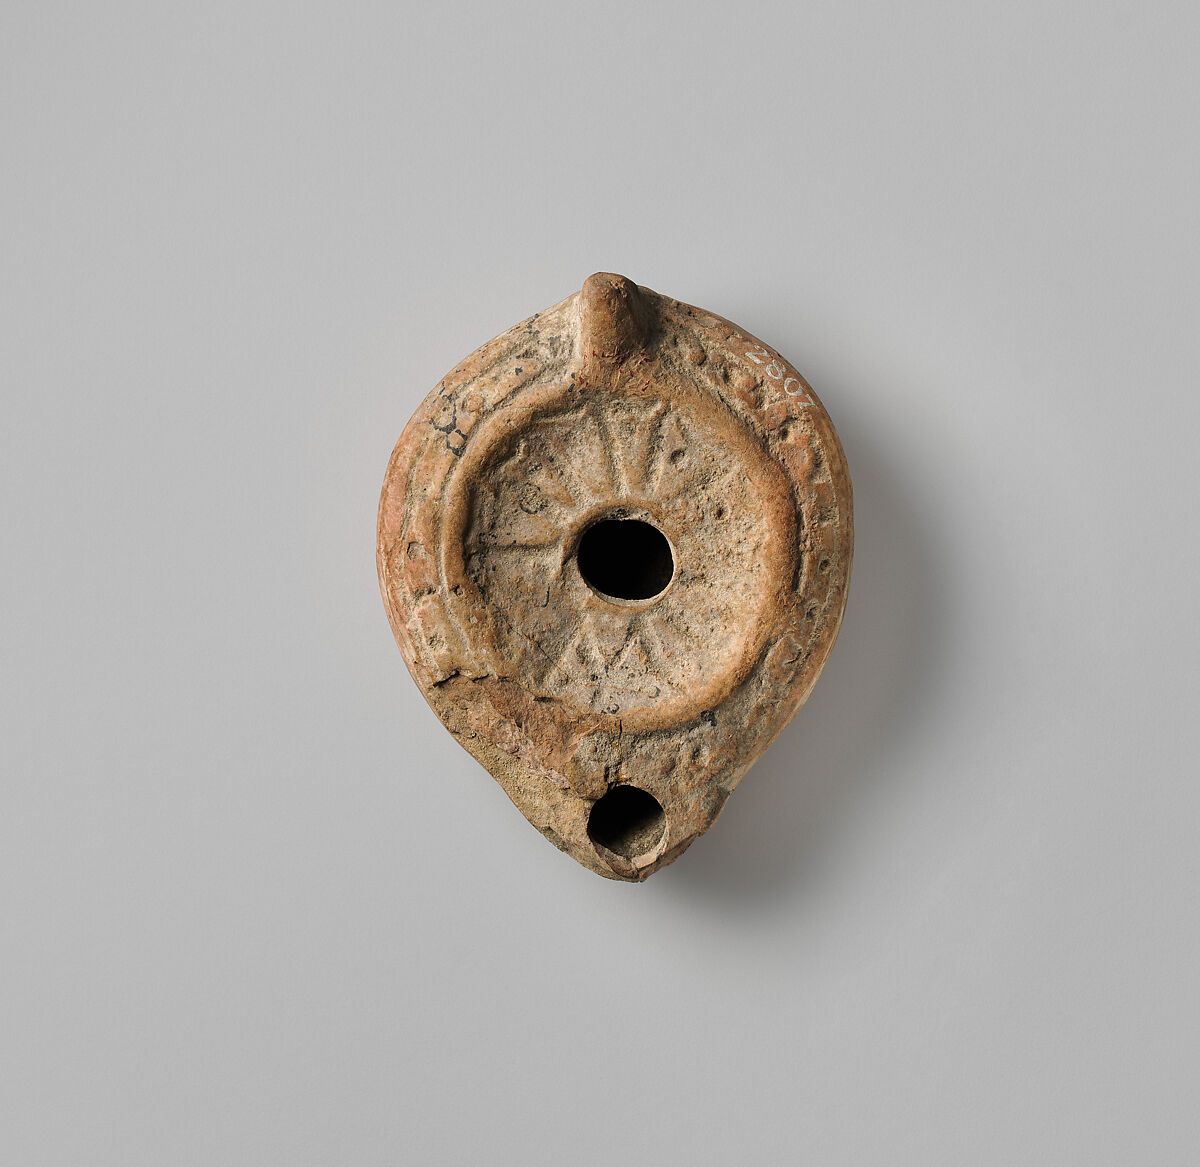 Details about   Ancient teracotta Roman oil lamp